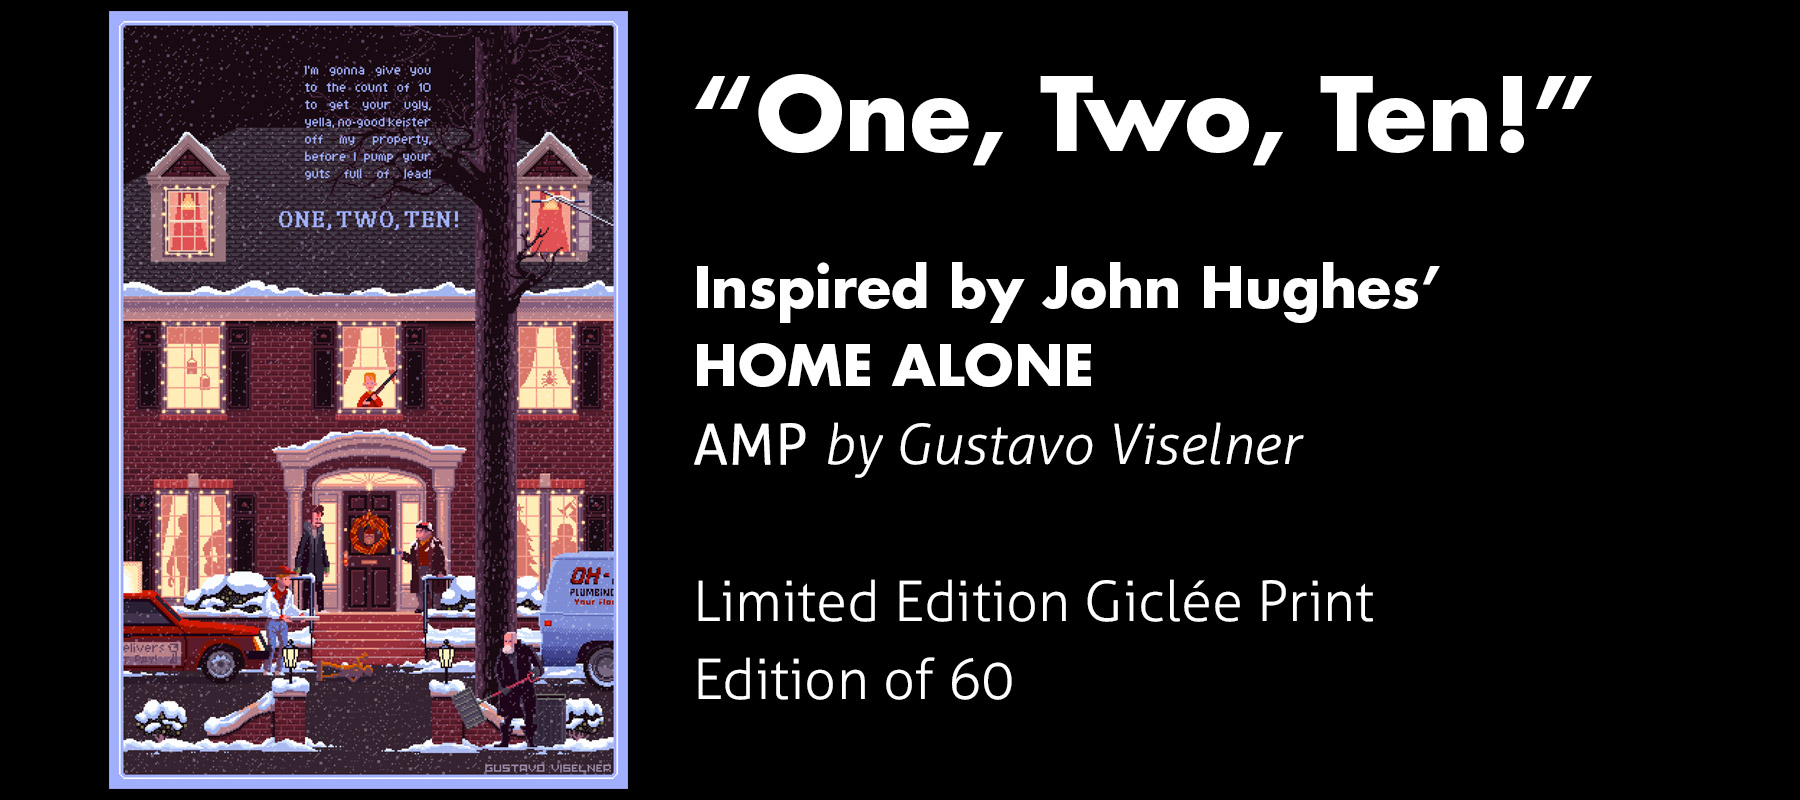 Home Alone inspired AMP by Gustavo Viselner